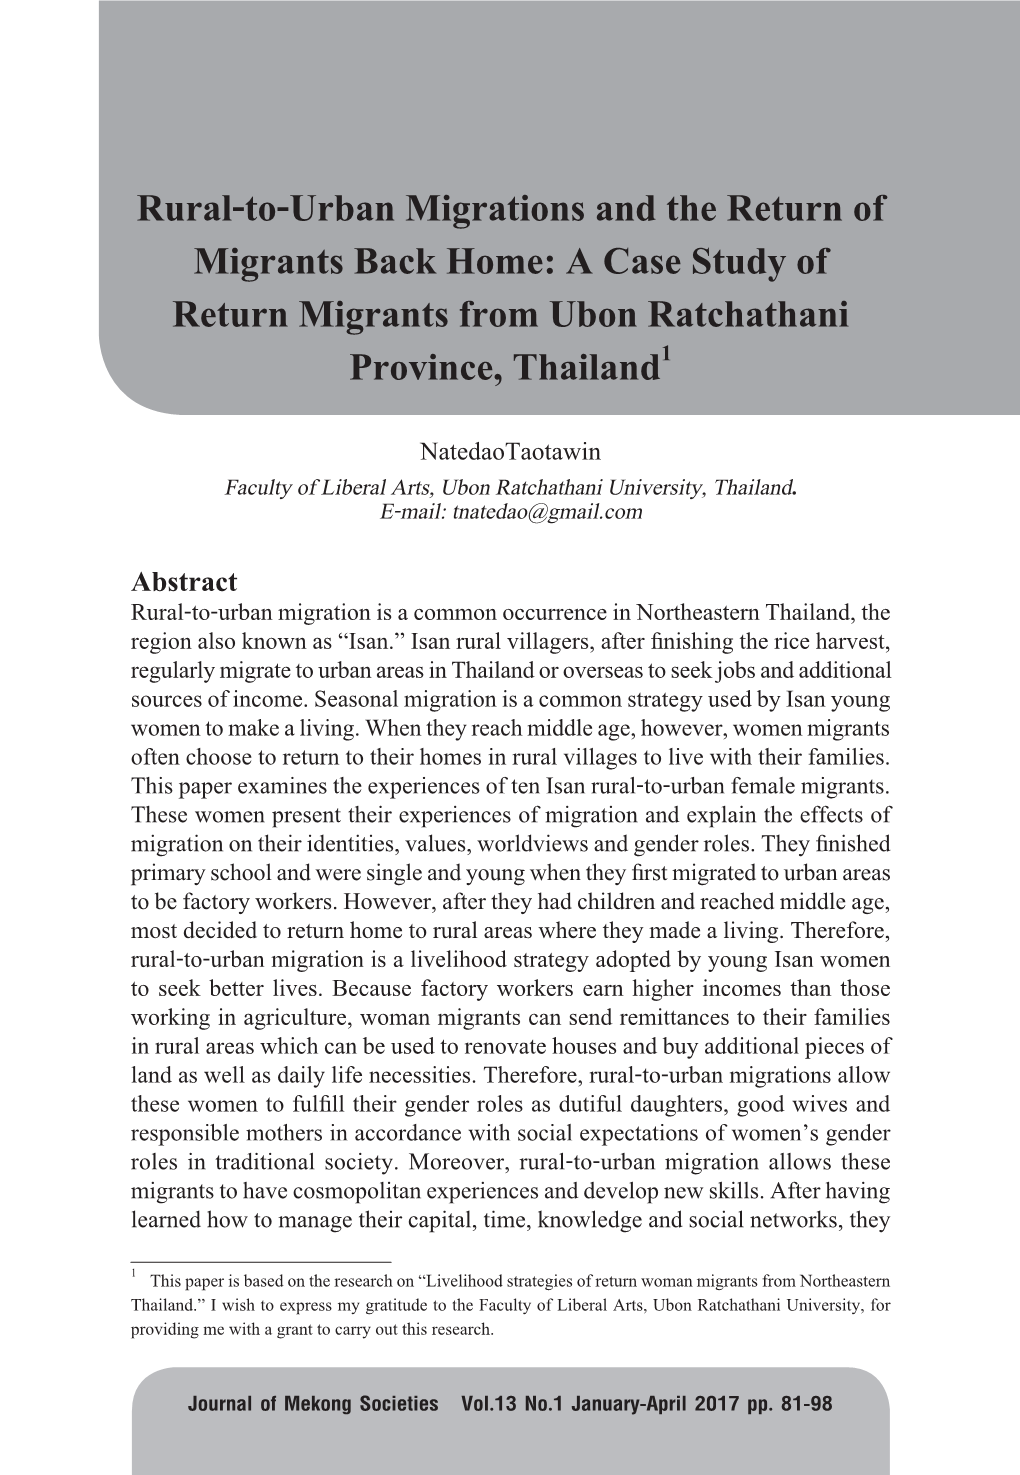 A Case Study of Return Migrants from Ubon Ratchathani Province, Thailand1 Natedaotaotawin Faculty of Liberal Arts, Ubon Ratchathani University, Thailand